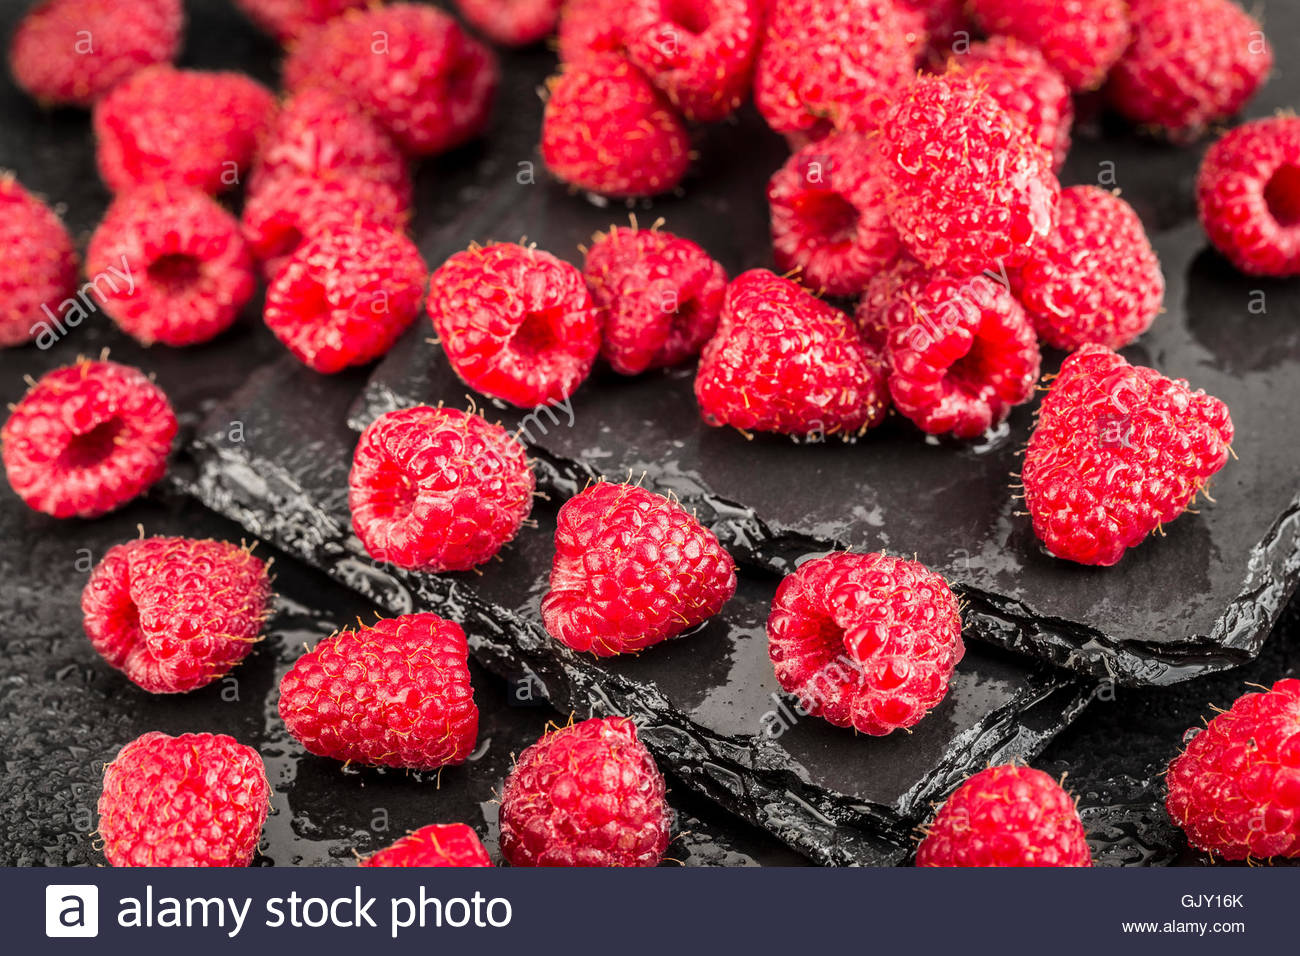 Wet Red Raspberries On A Black Slate Background Stock Photo